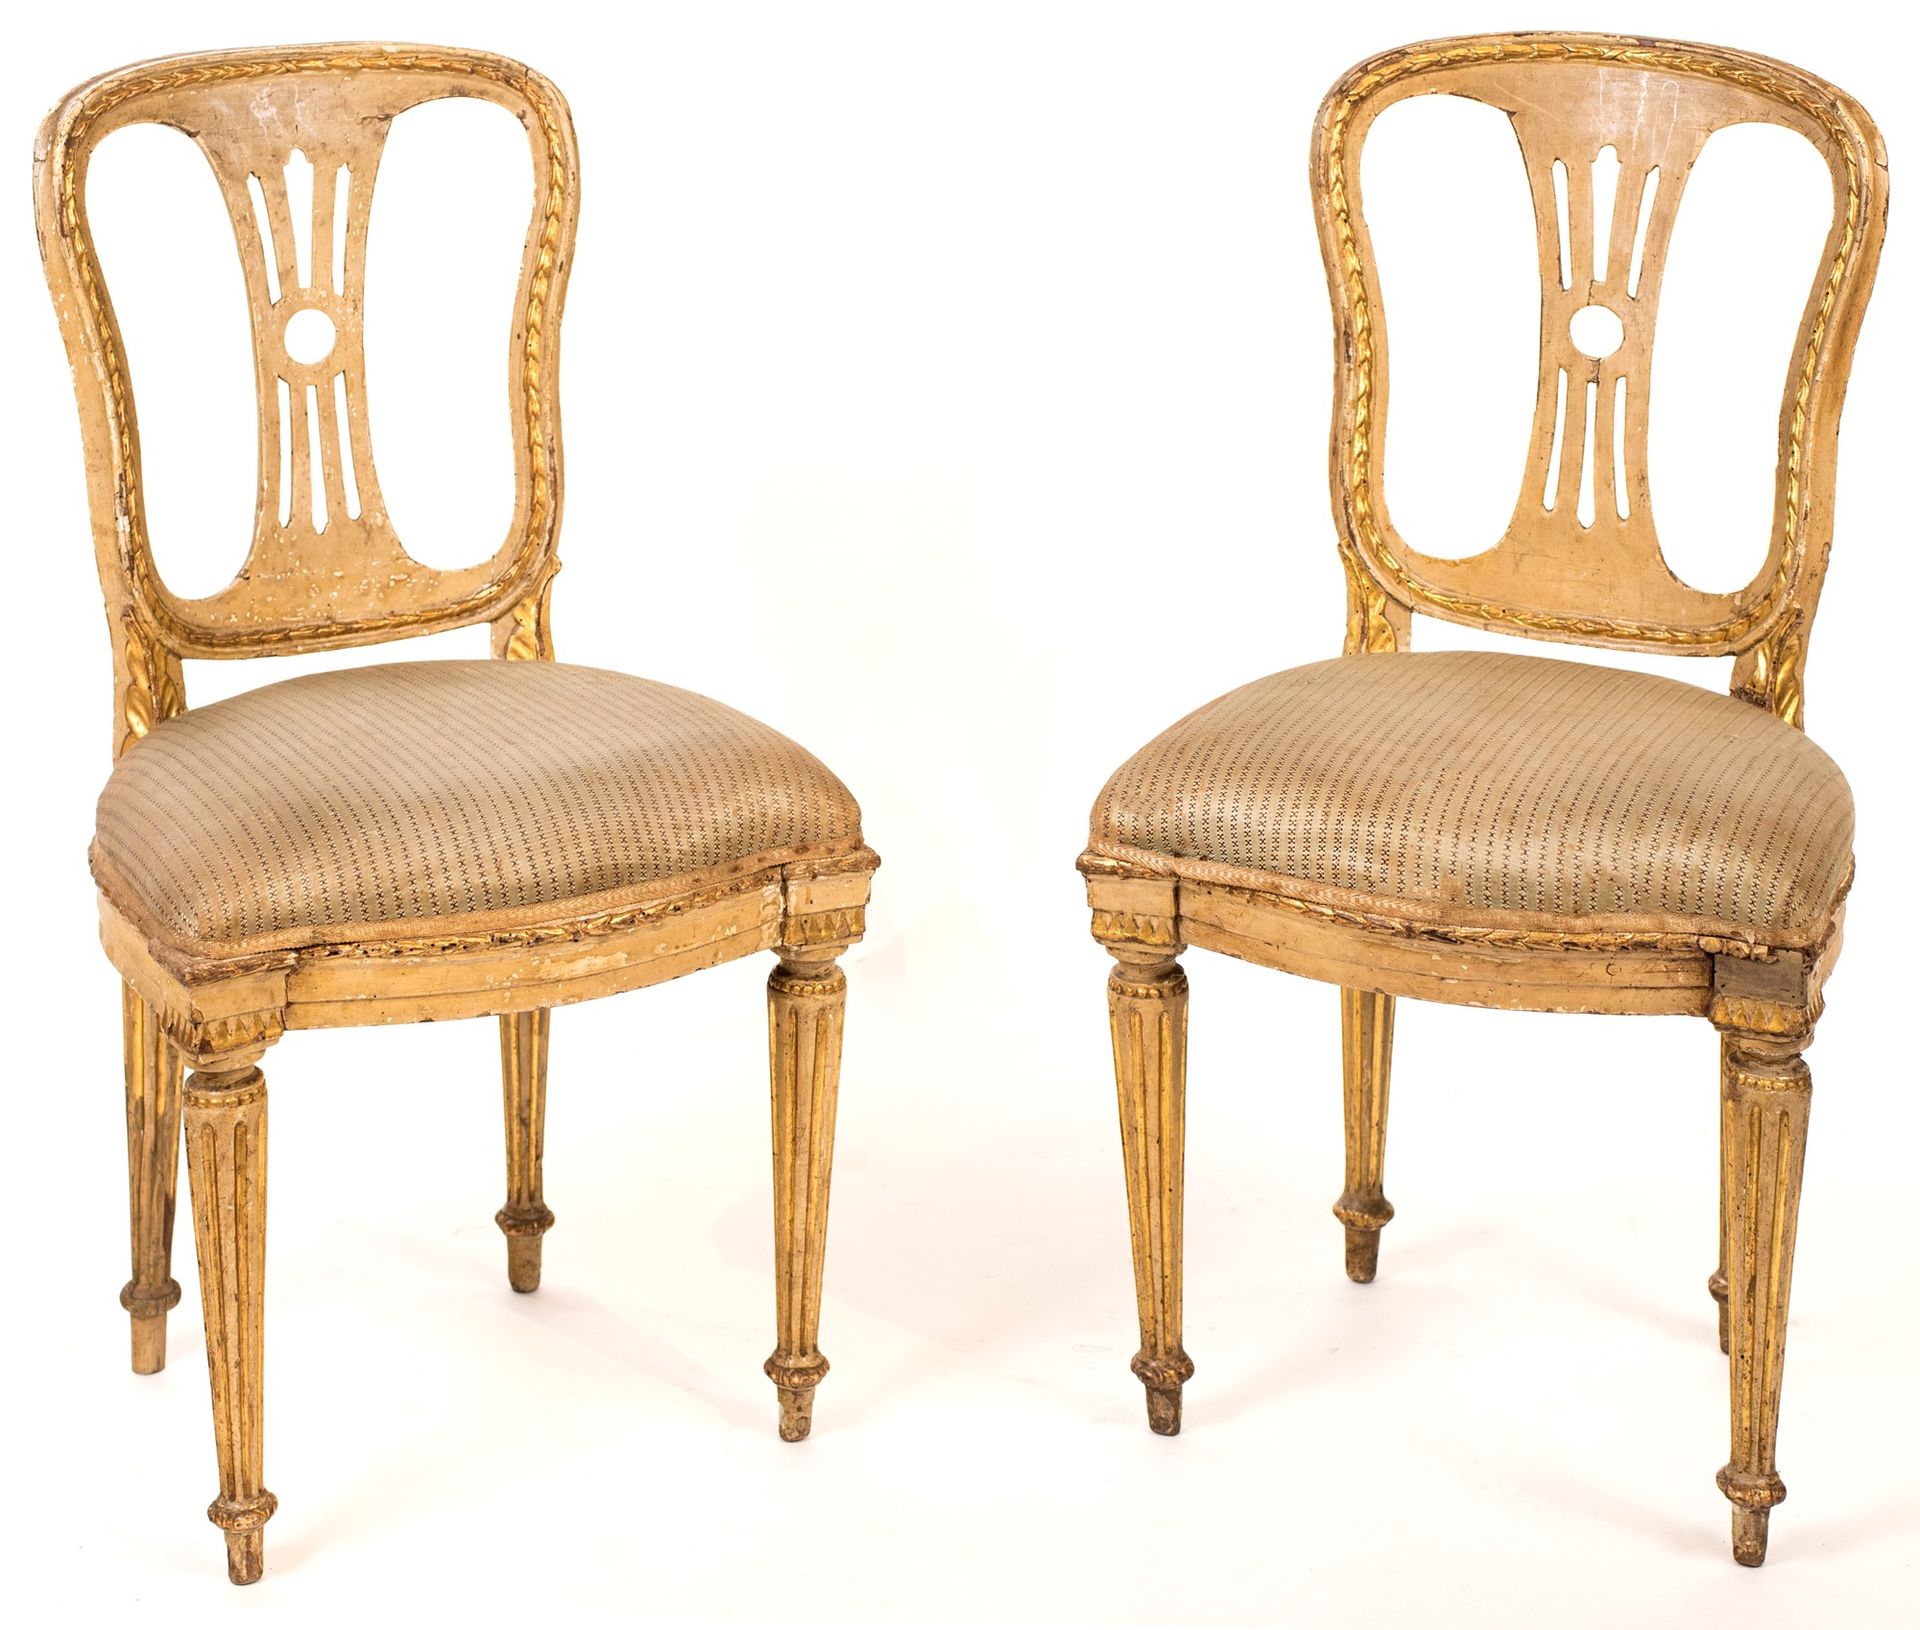 Pair of chairs in lacquered wood, late 18th century dorés le long des profils et&hellip;